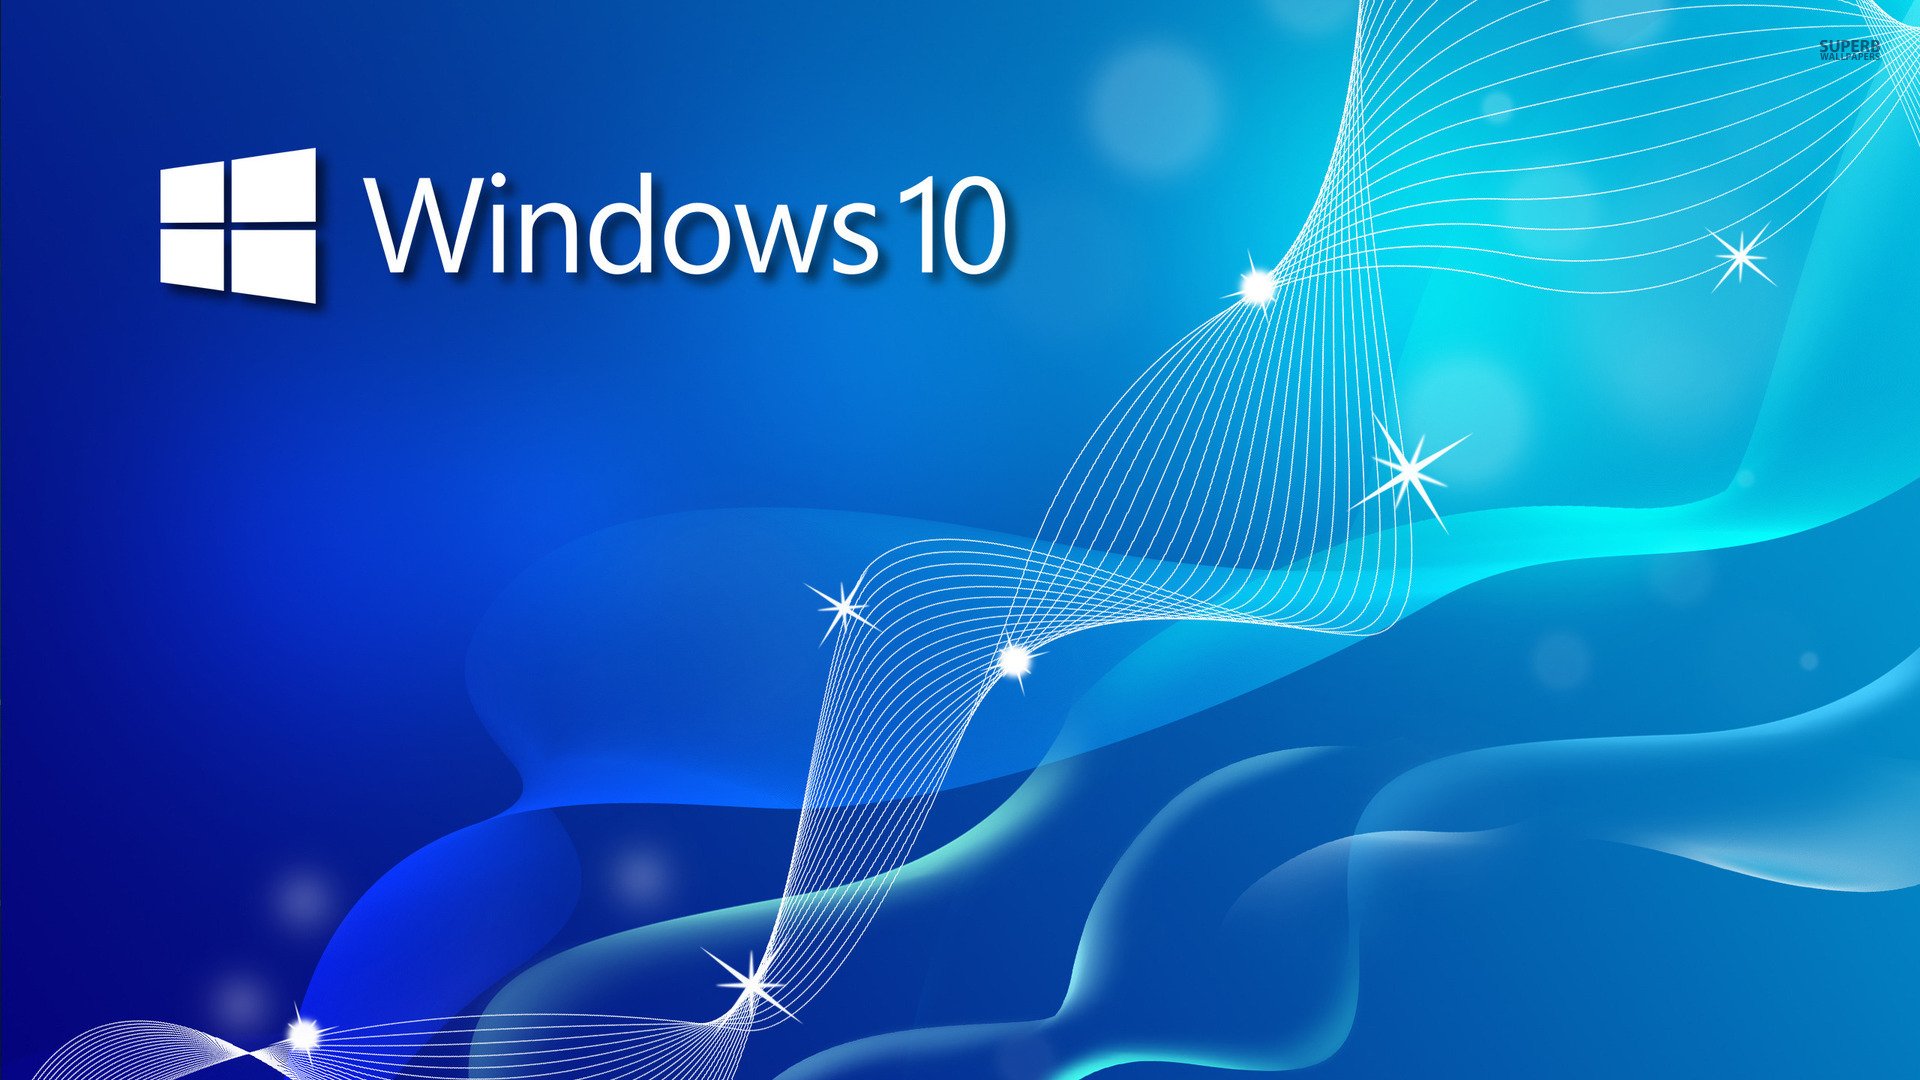 40+] Windows 10 Wallpaper Free Download - WallpaperSafari